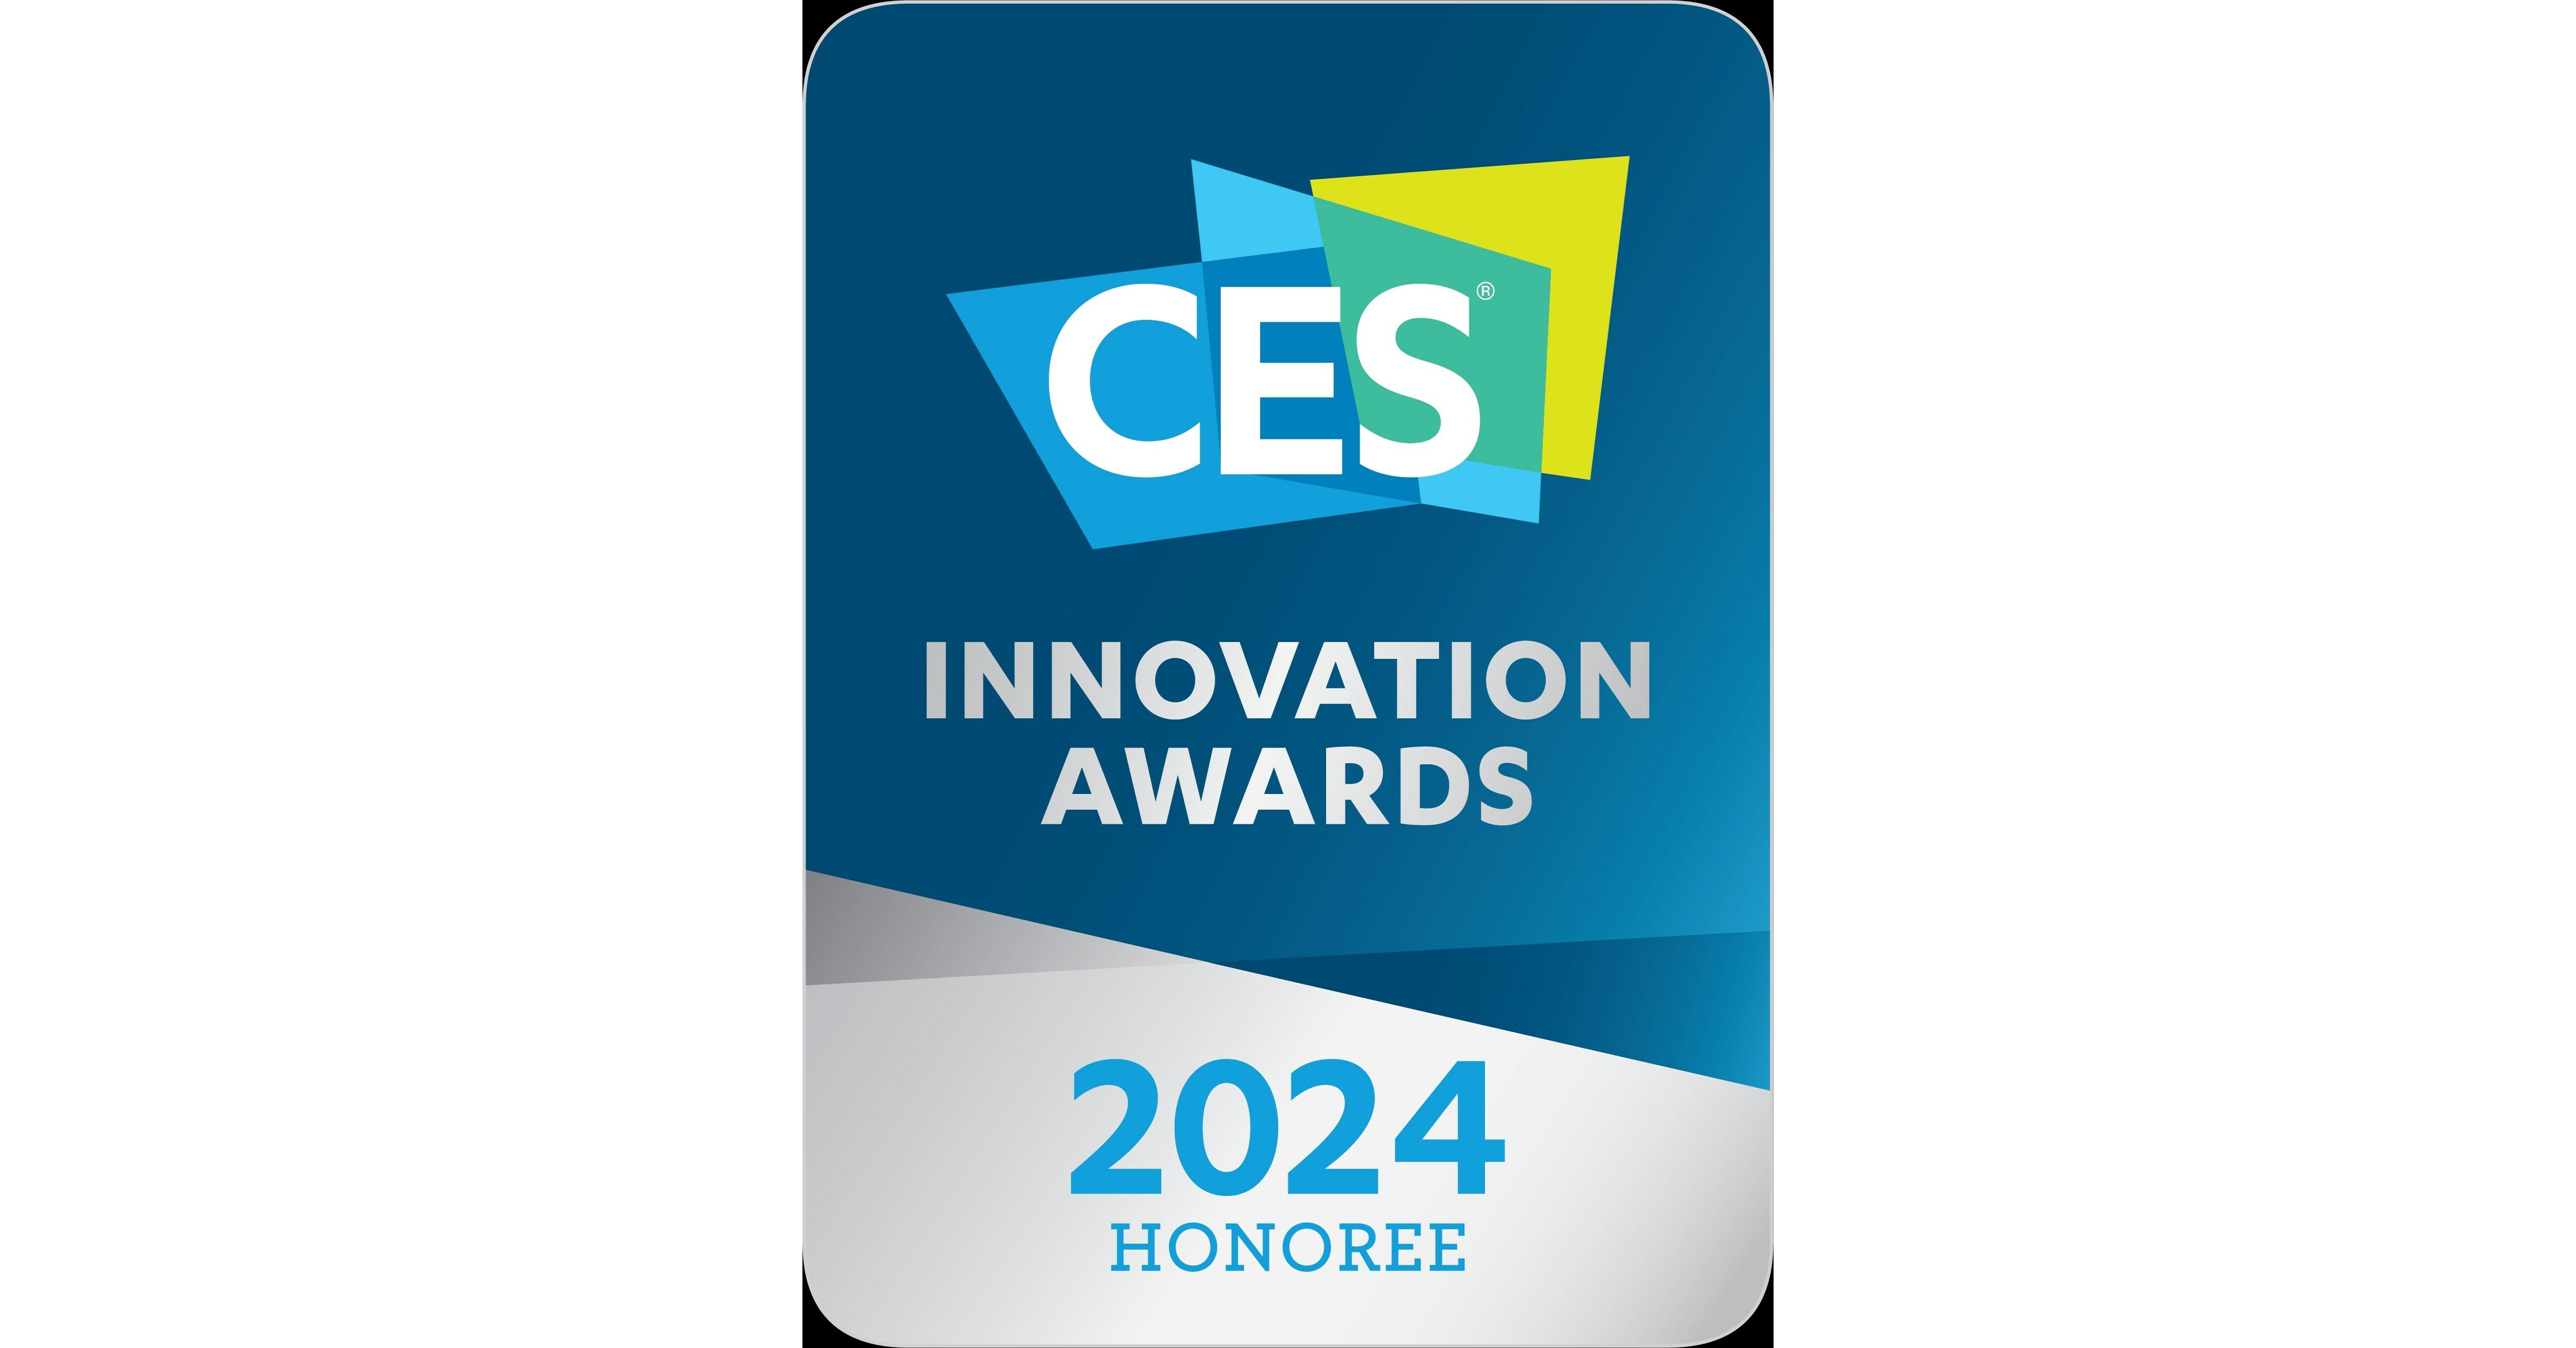 Innovation Award Honorees